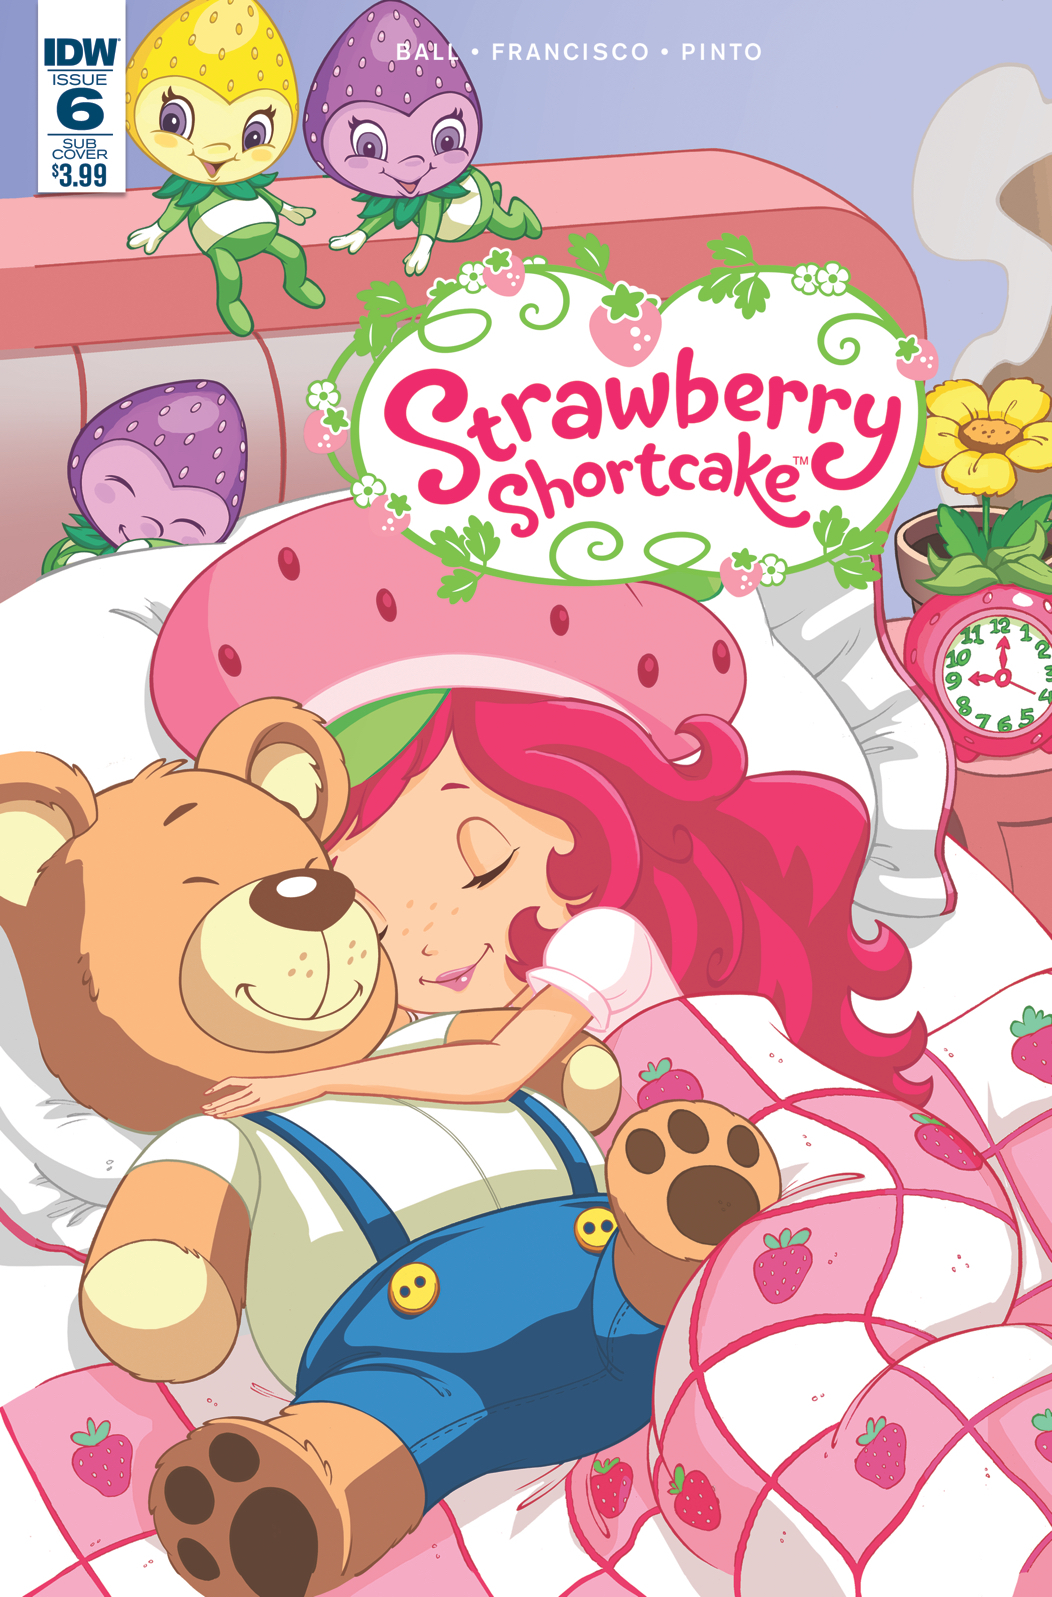 Strawberry shortcake comic